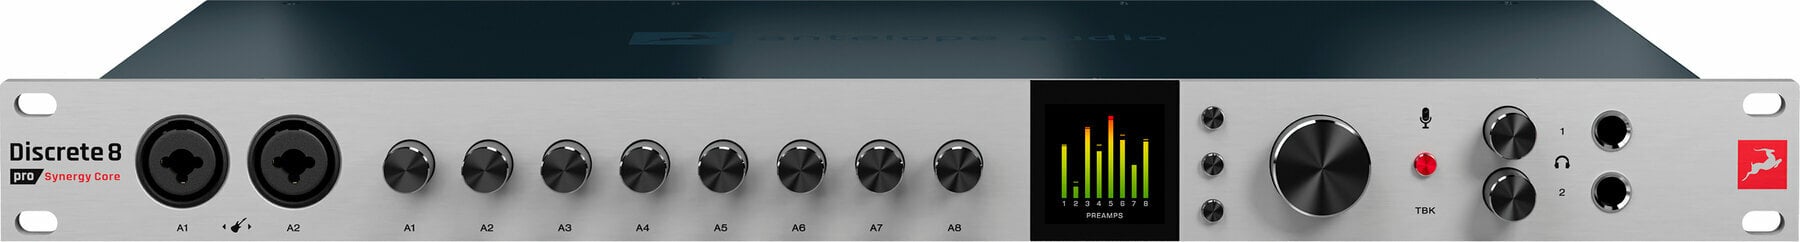 Thunderbolt Audiointerface Antelope Audio Discrete 8 Pro Synergy Core